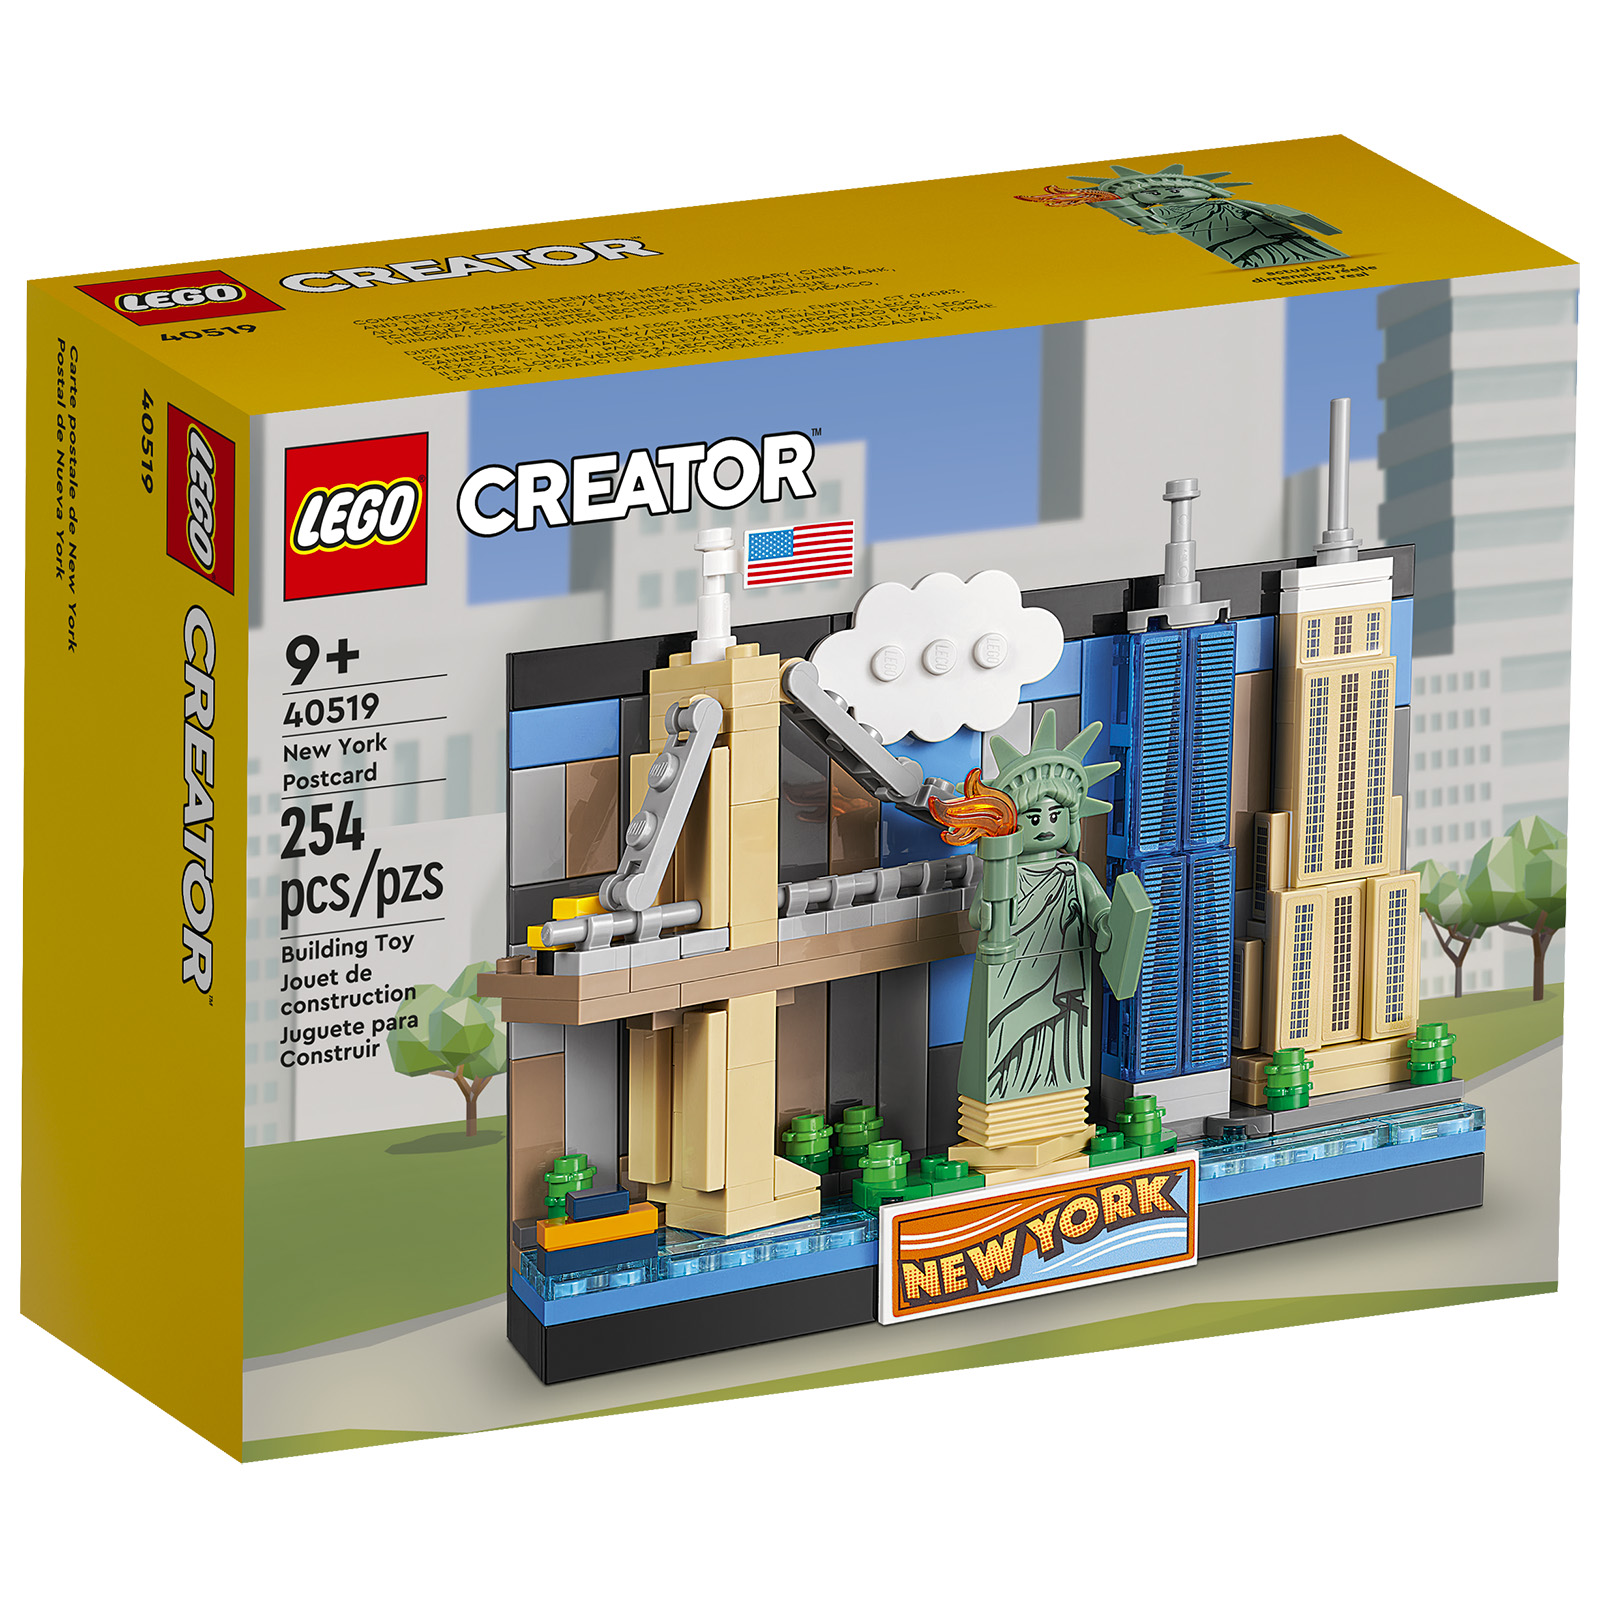 LEGO Creator 2022 Postcard Sets Revealed The Brick Fan